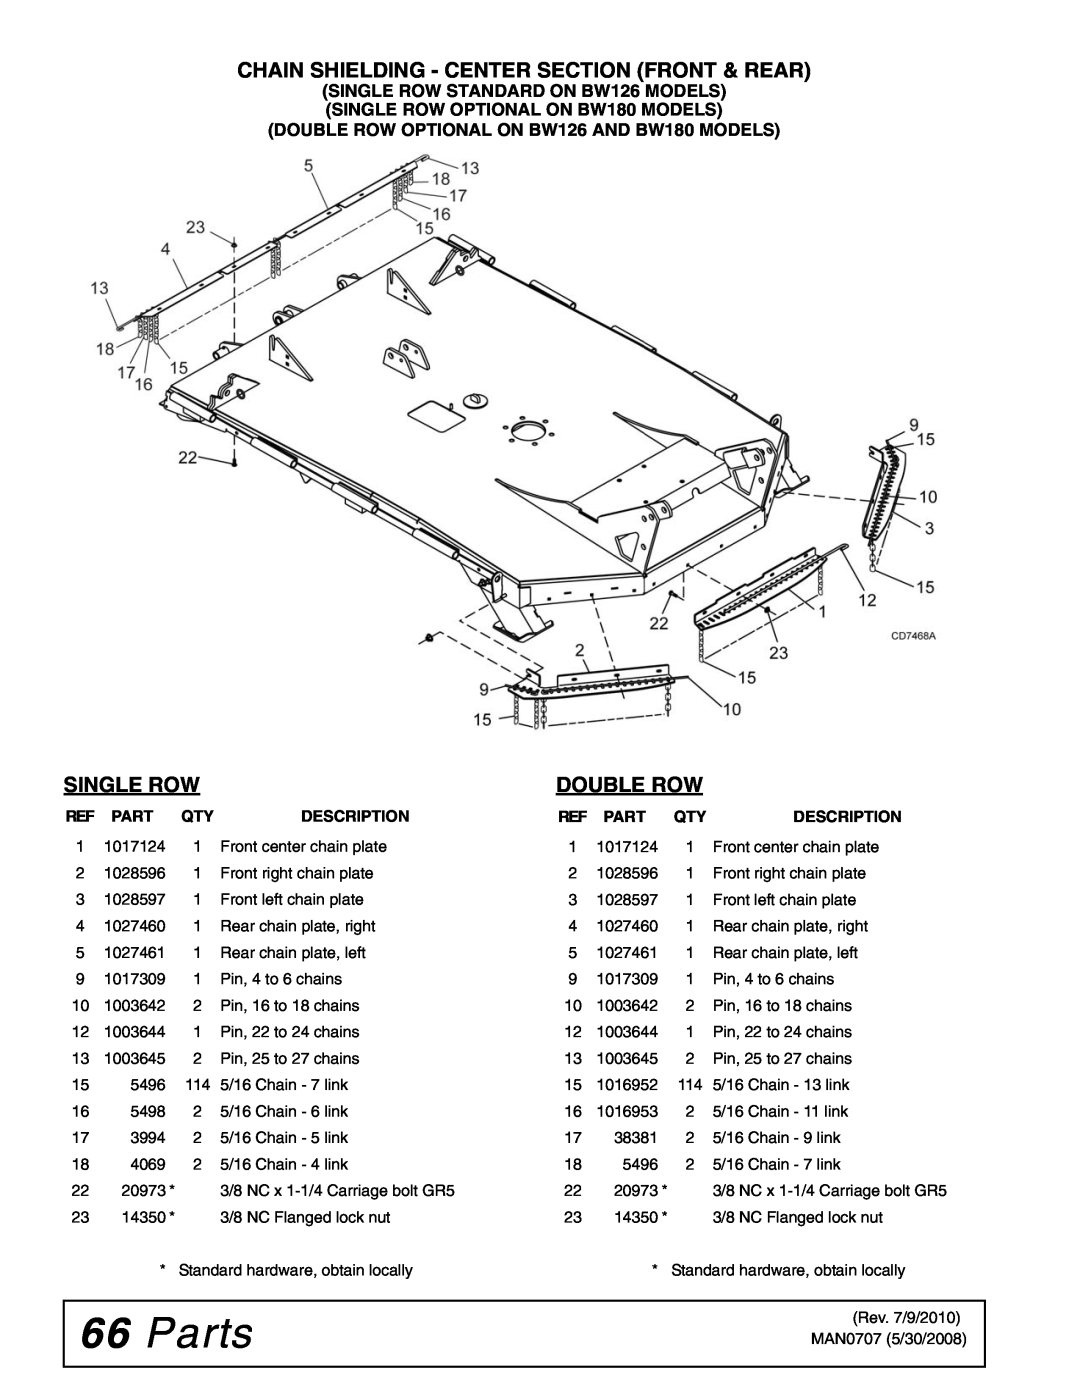 Woods Equipment BW126Q-3 manual Parts, Chain Shielding - Center Section Front & Rear, Single Row, Double Row, Description 